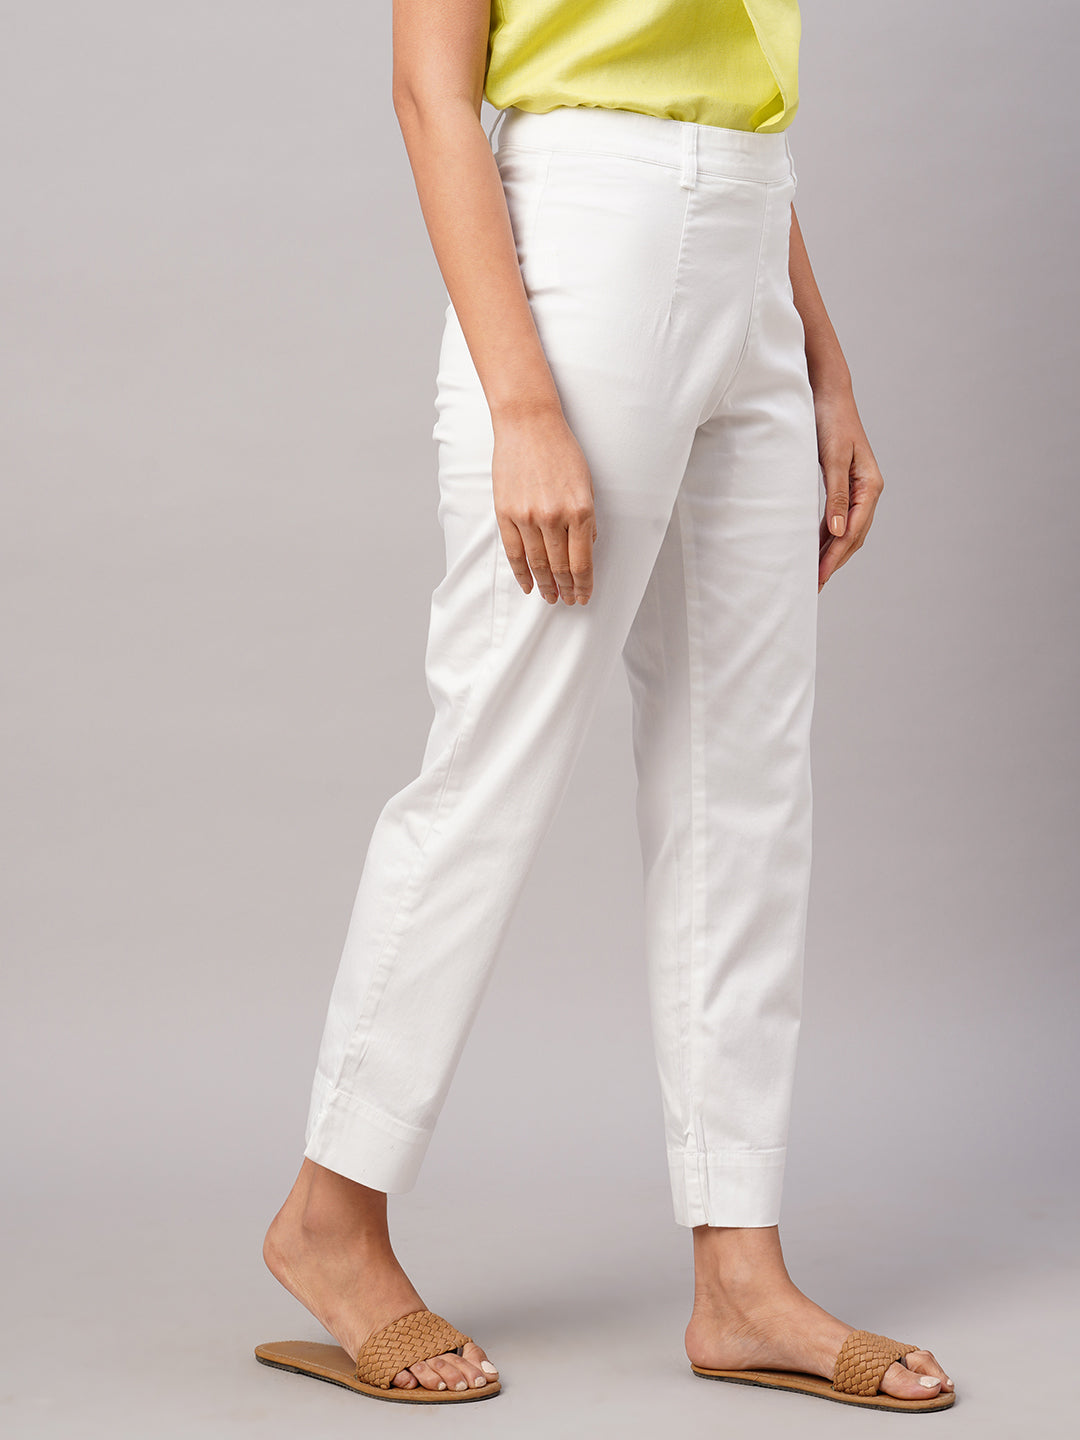 Buy Varanga White Ankle Length Pants  Palazzos for Women 2192091  Myntra